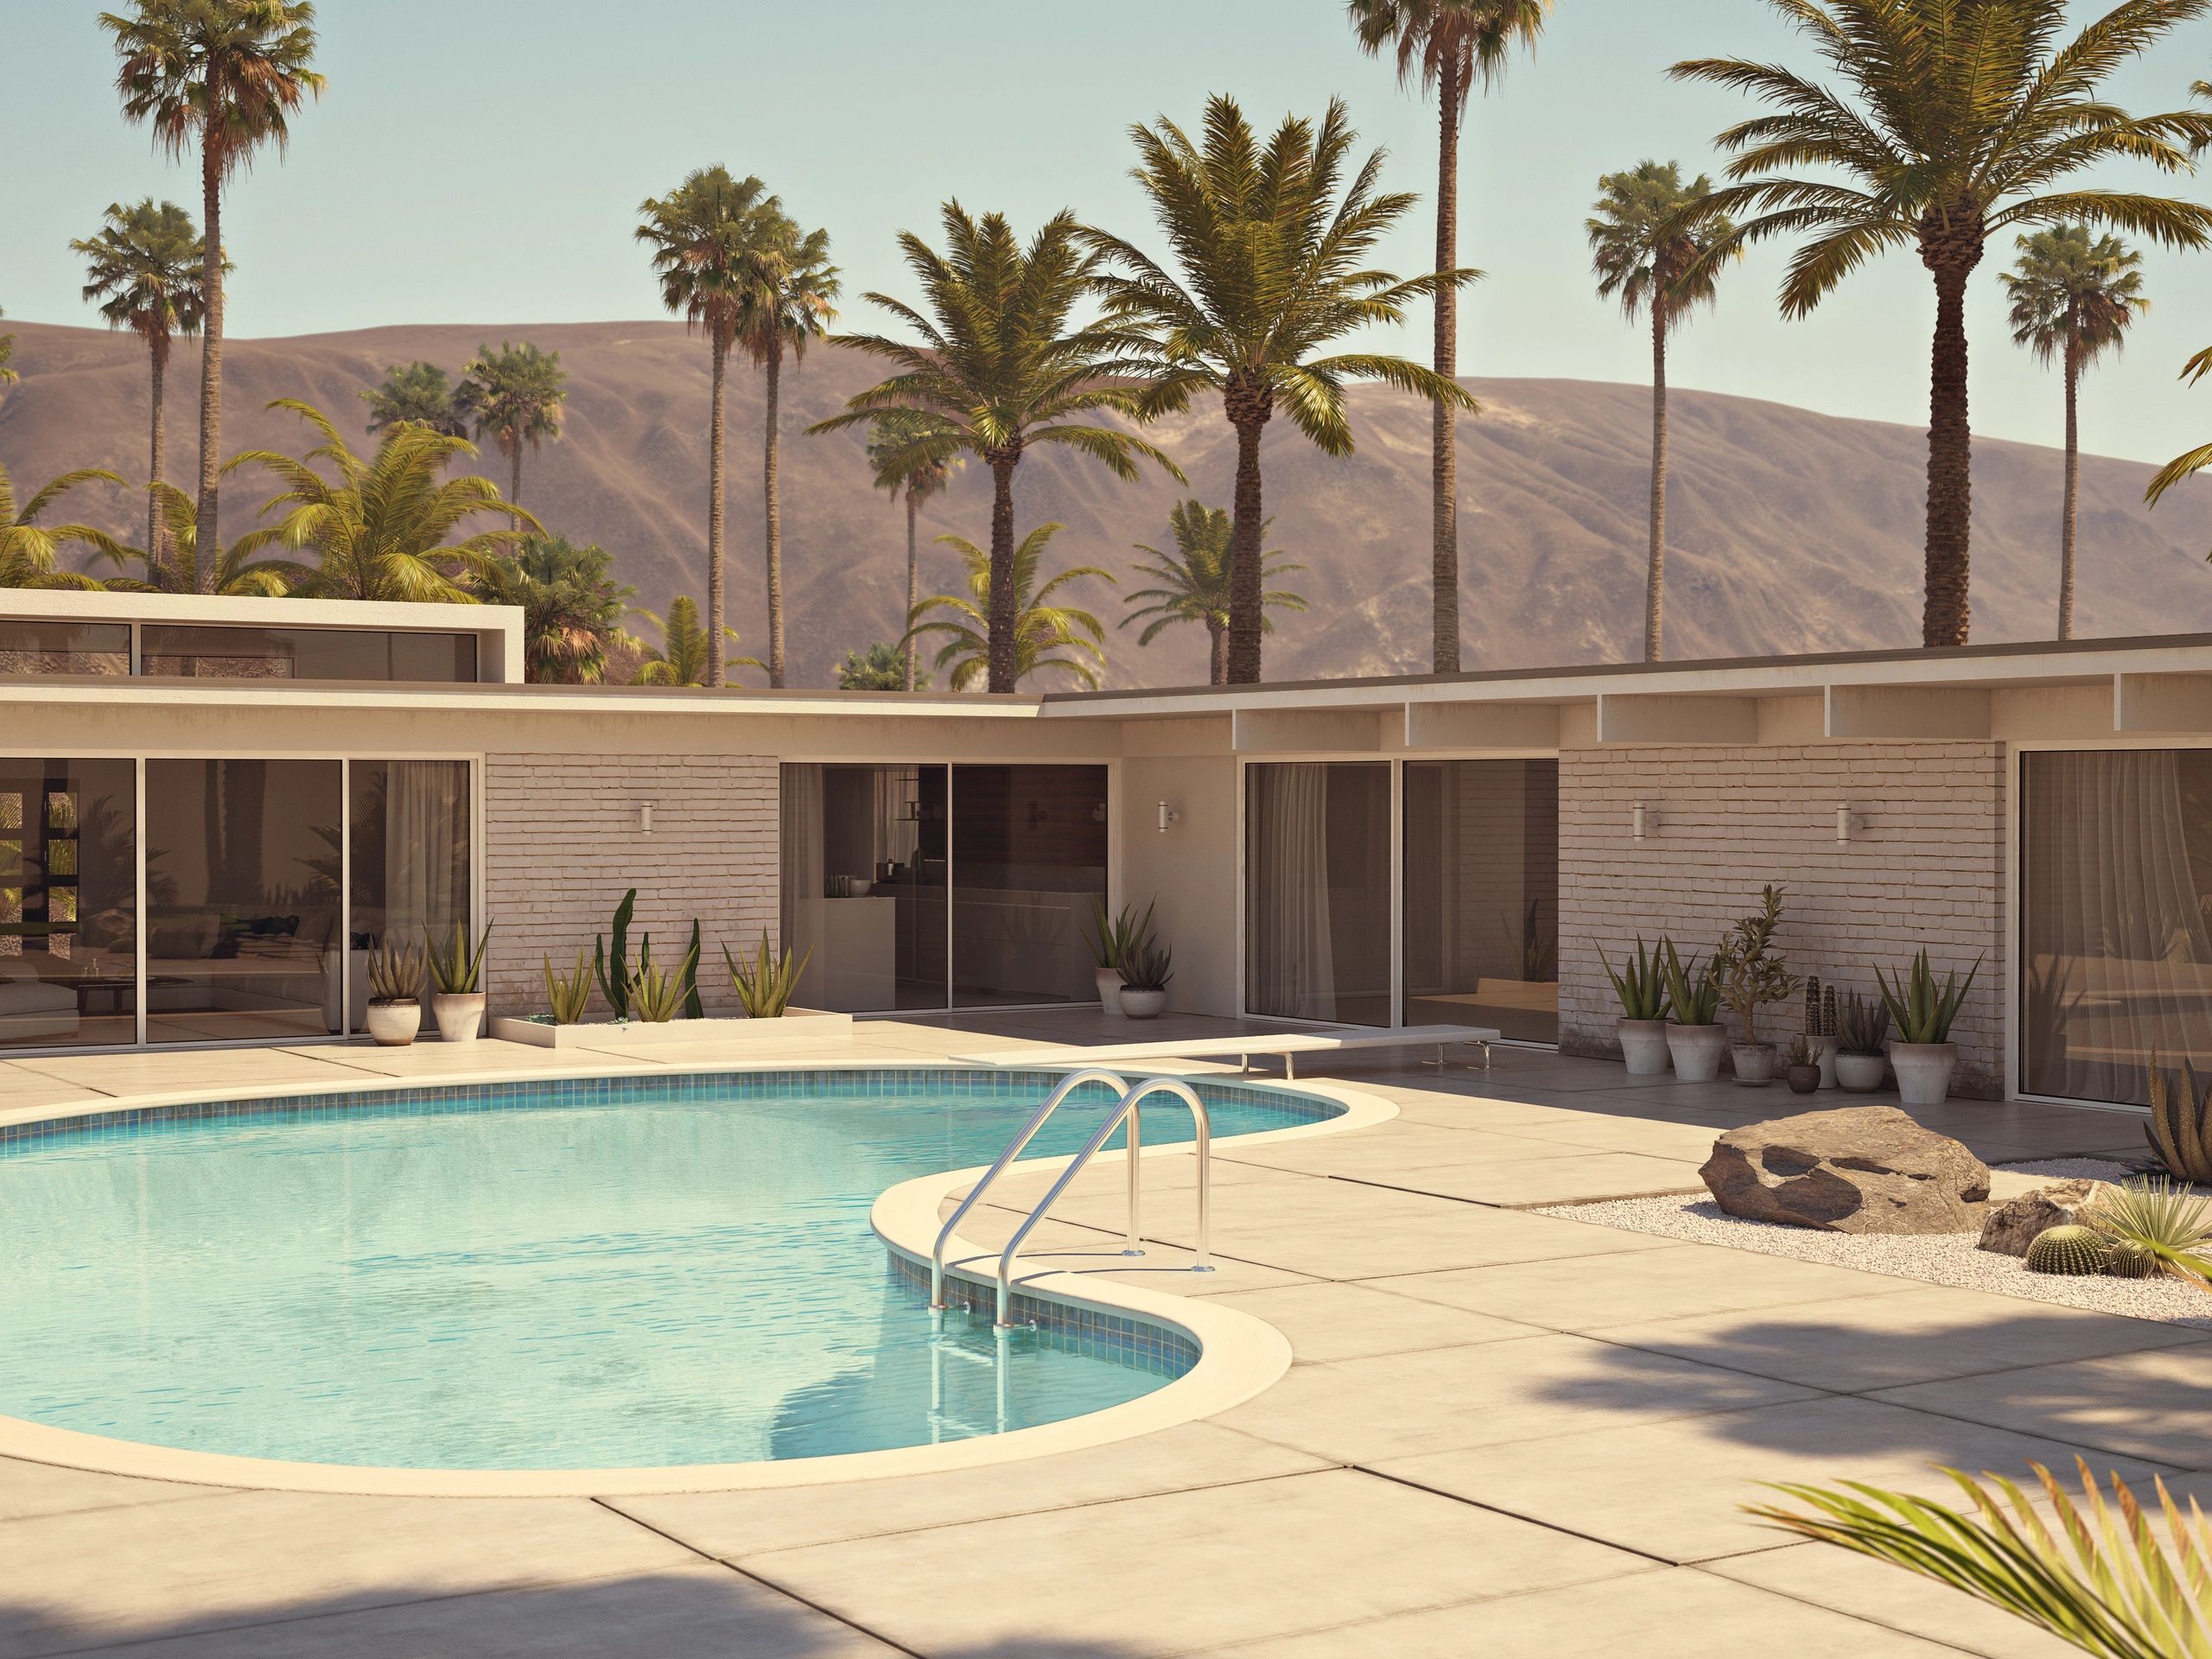 Palm Springs Rental Agency - Vacation Home Management - PoolsideVacationRentals.com